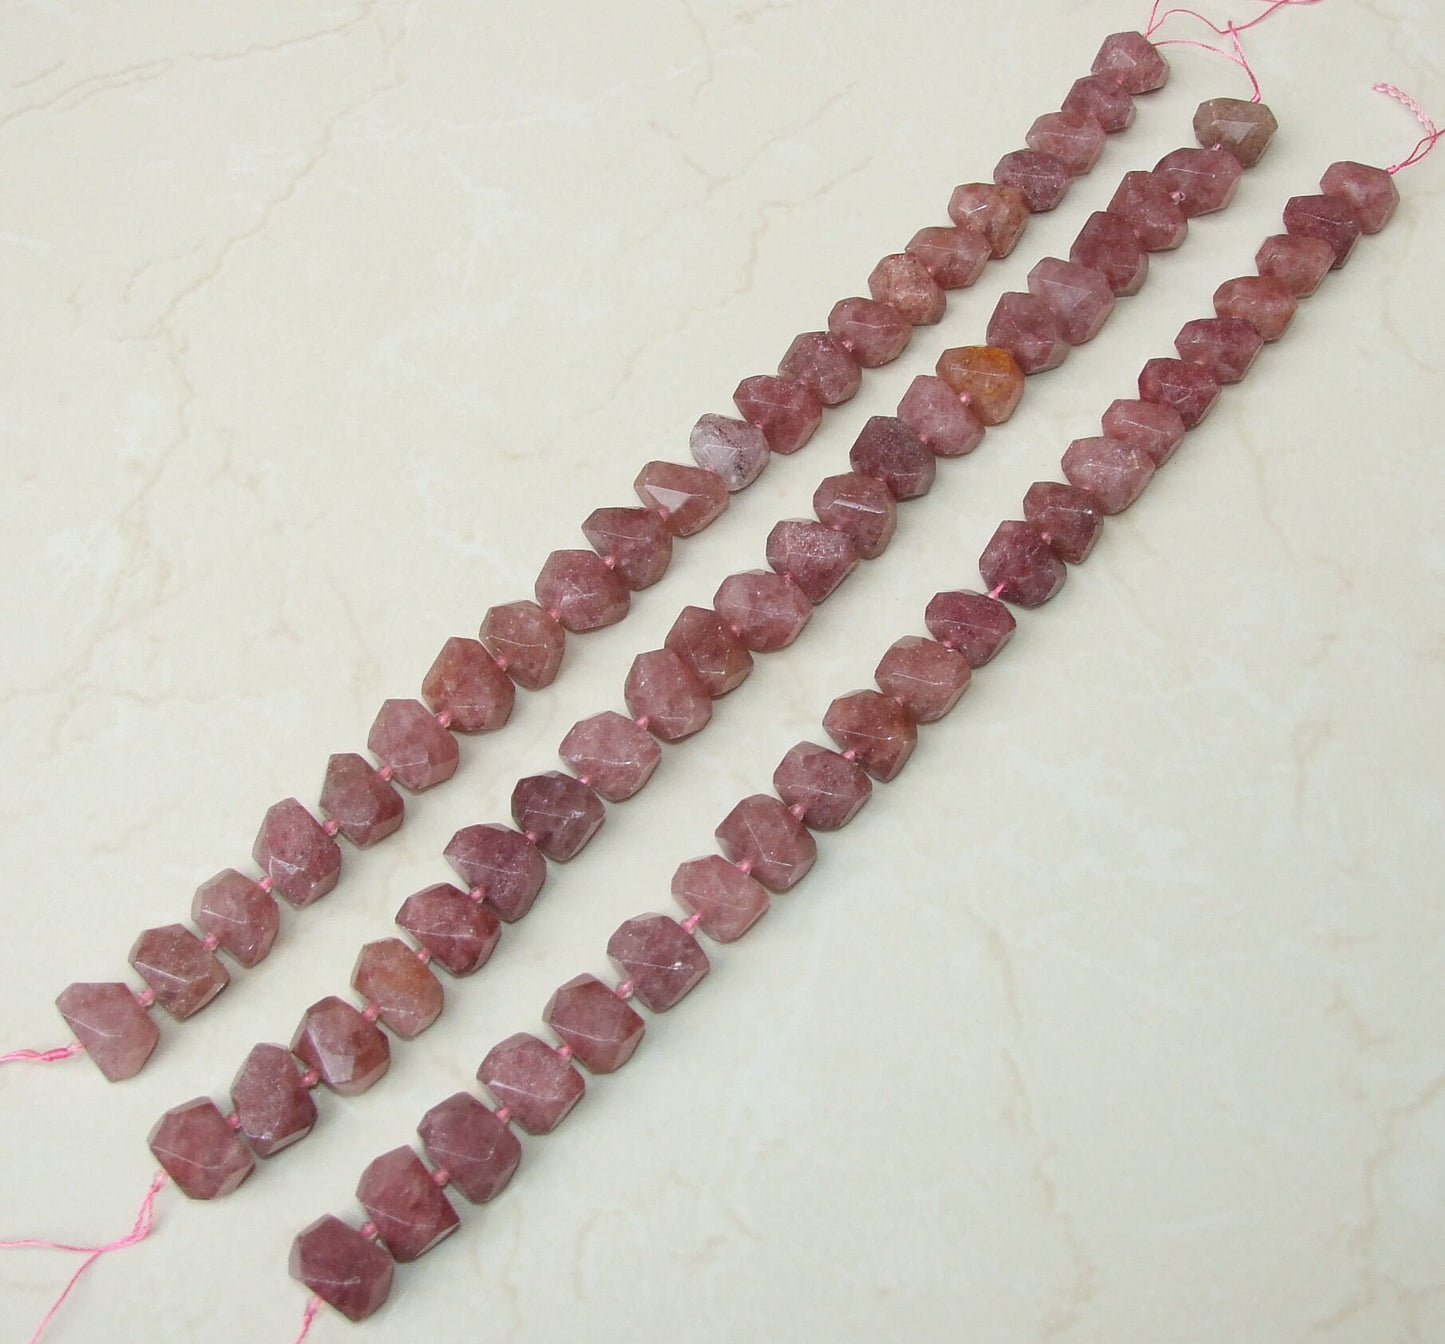 Strawberry Quartz Faceted Nugget, Quartz Pendant, Gemstone Beads, Jewelry Stones, Strawberry Quartz Beads, Half Strand - 14mm x 14mm x 19mm